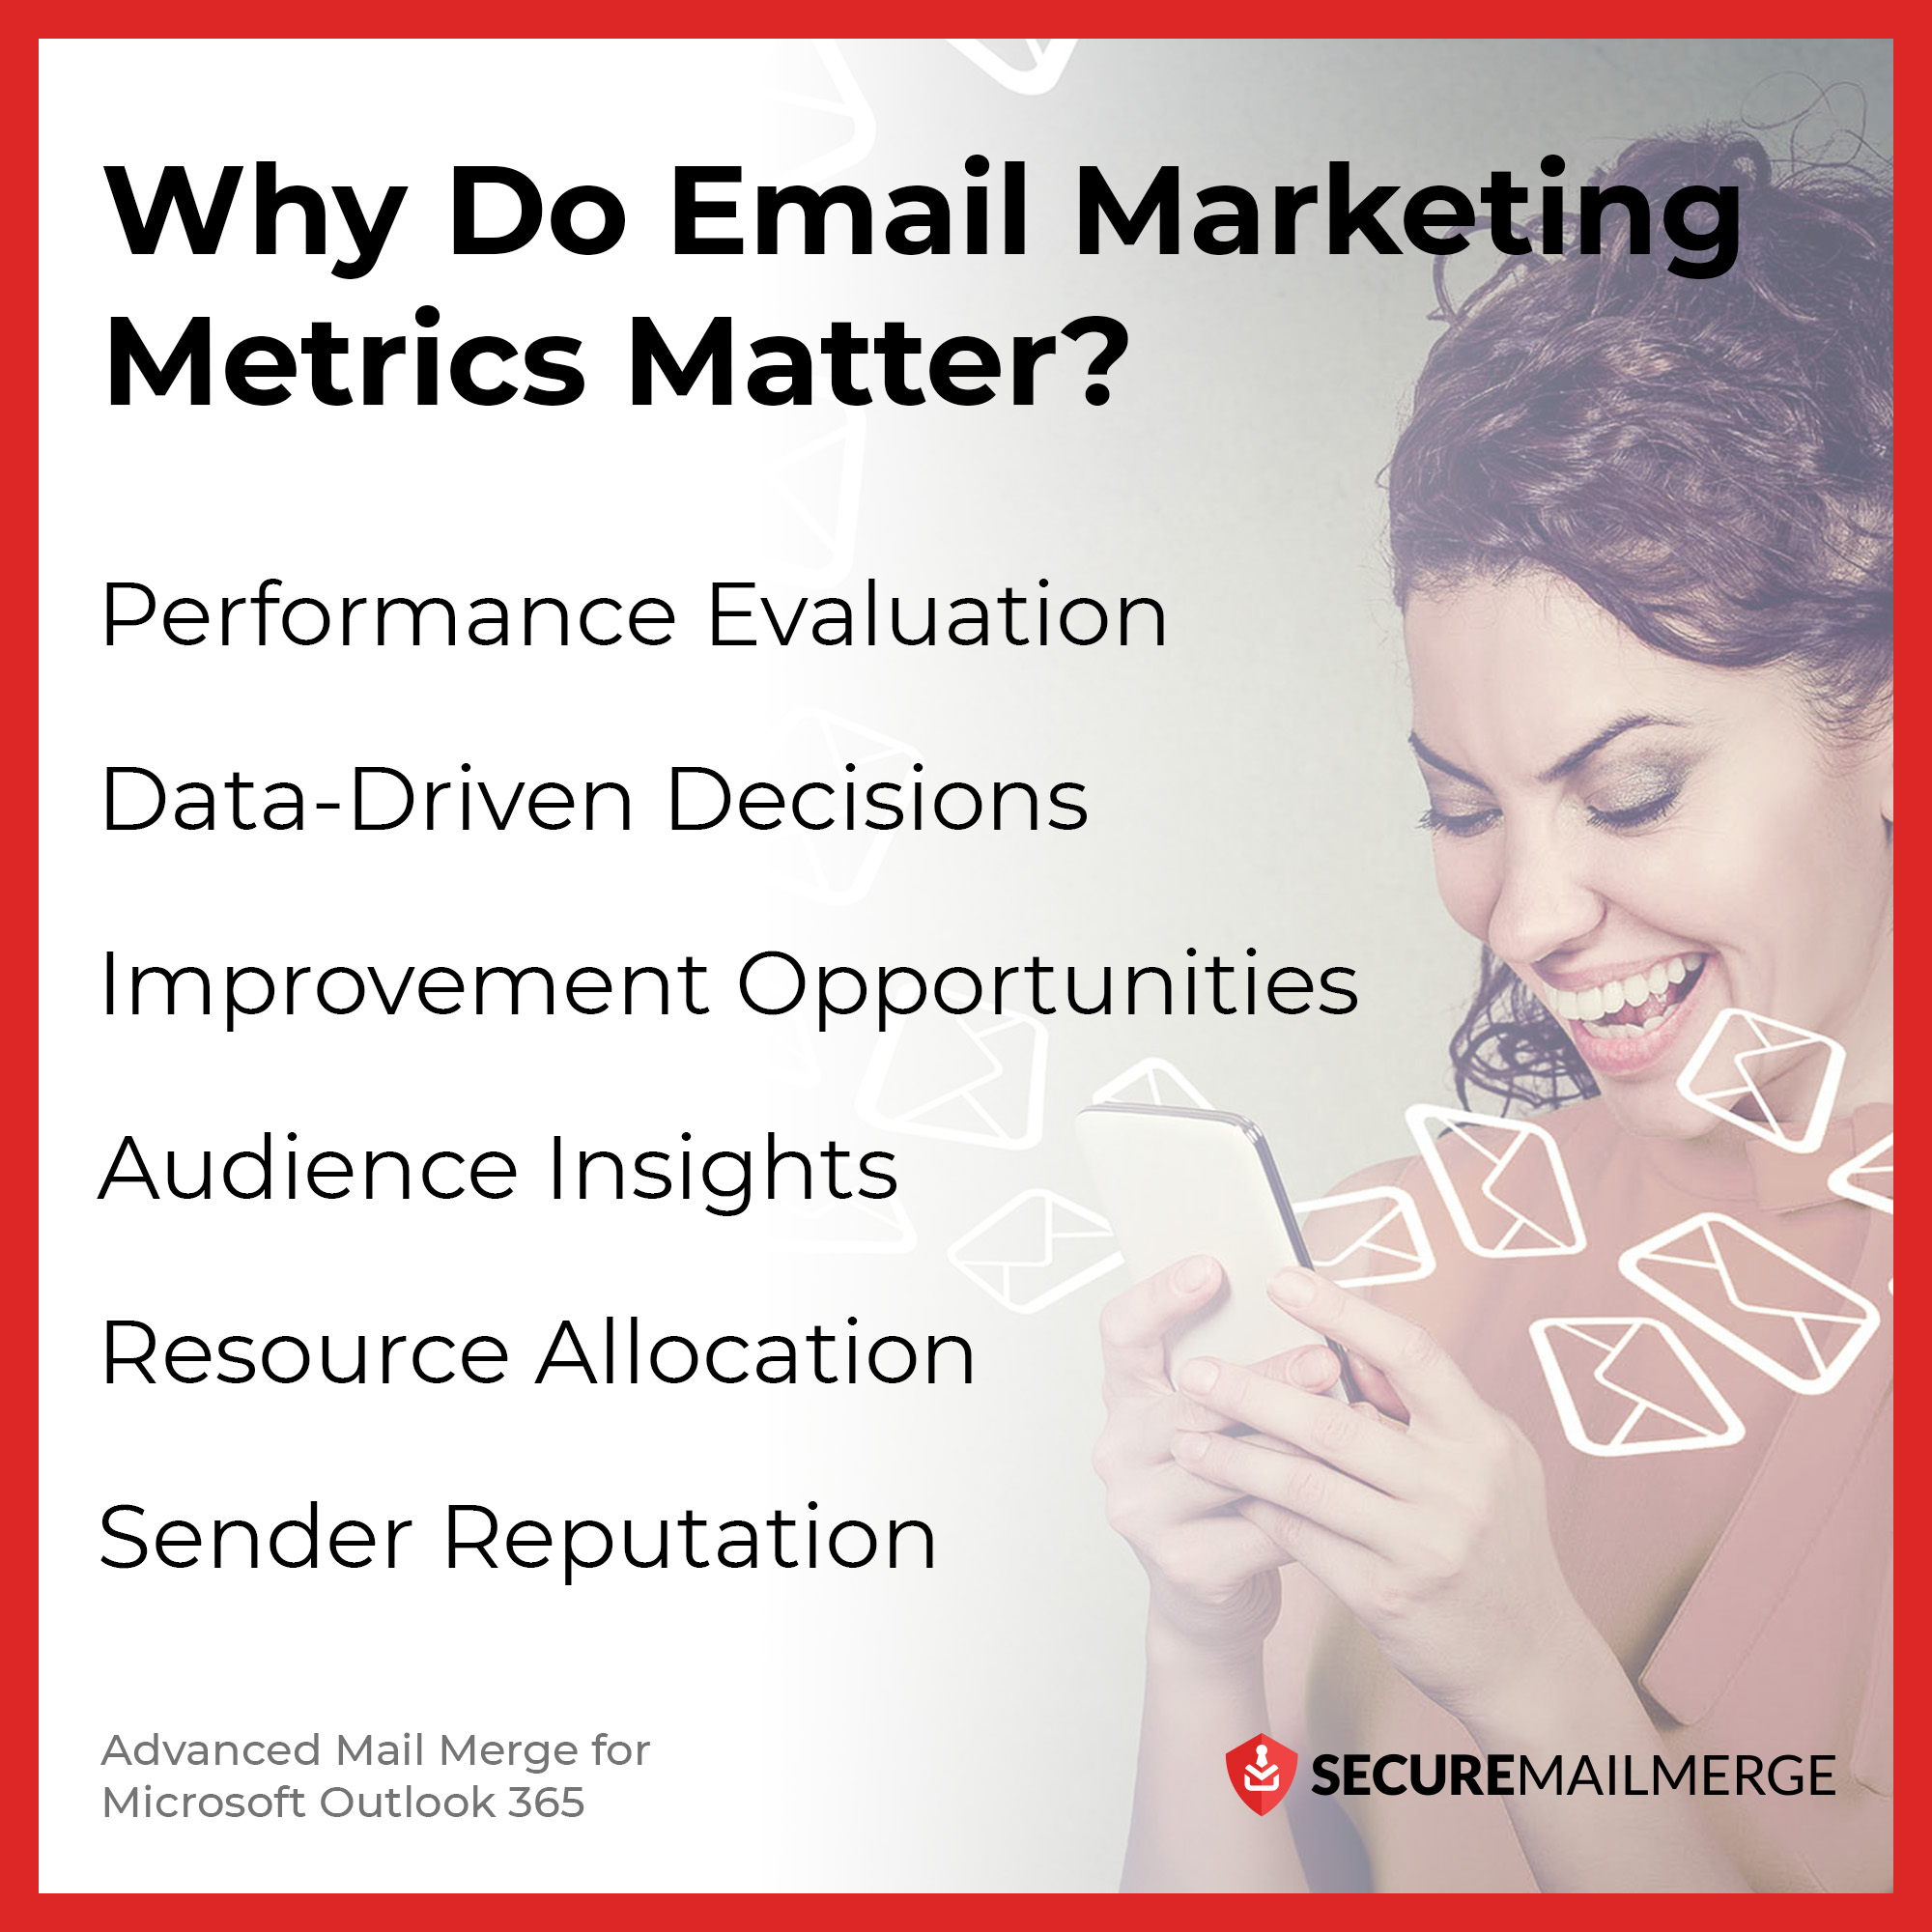 Why Do Email Marketing Metrics Matter?